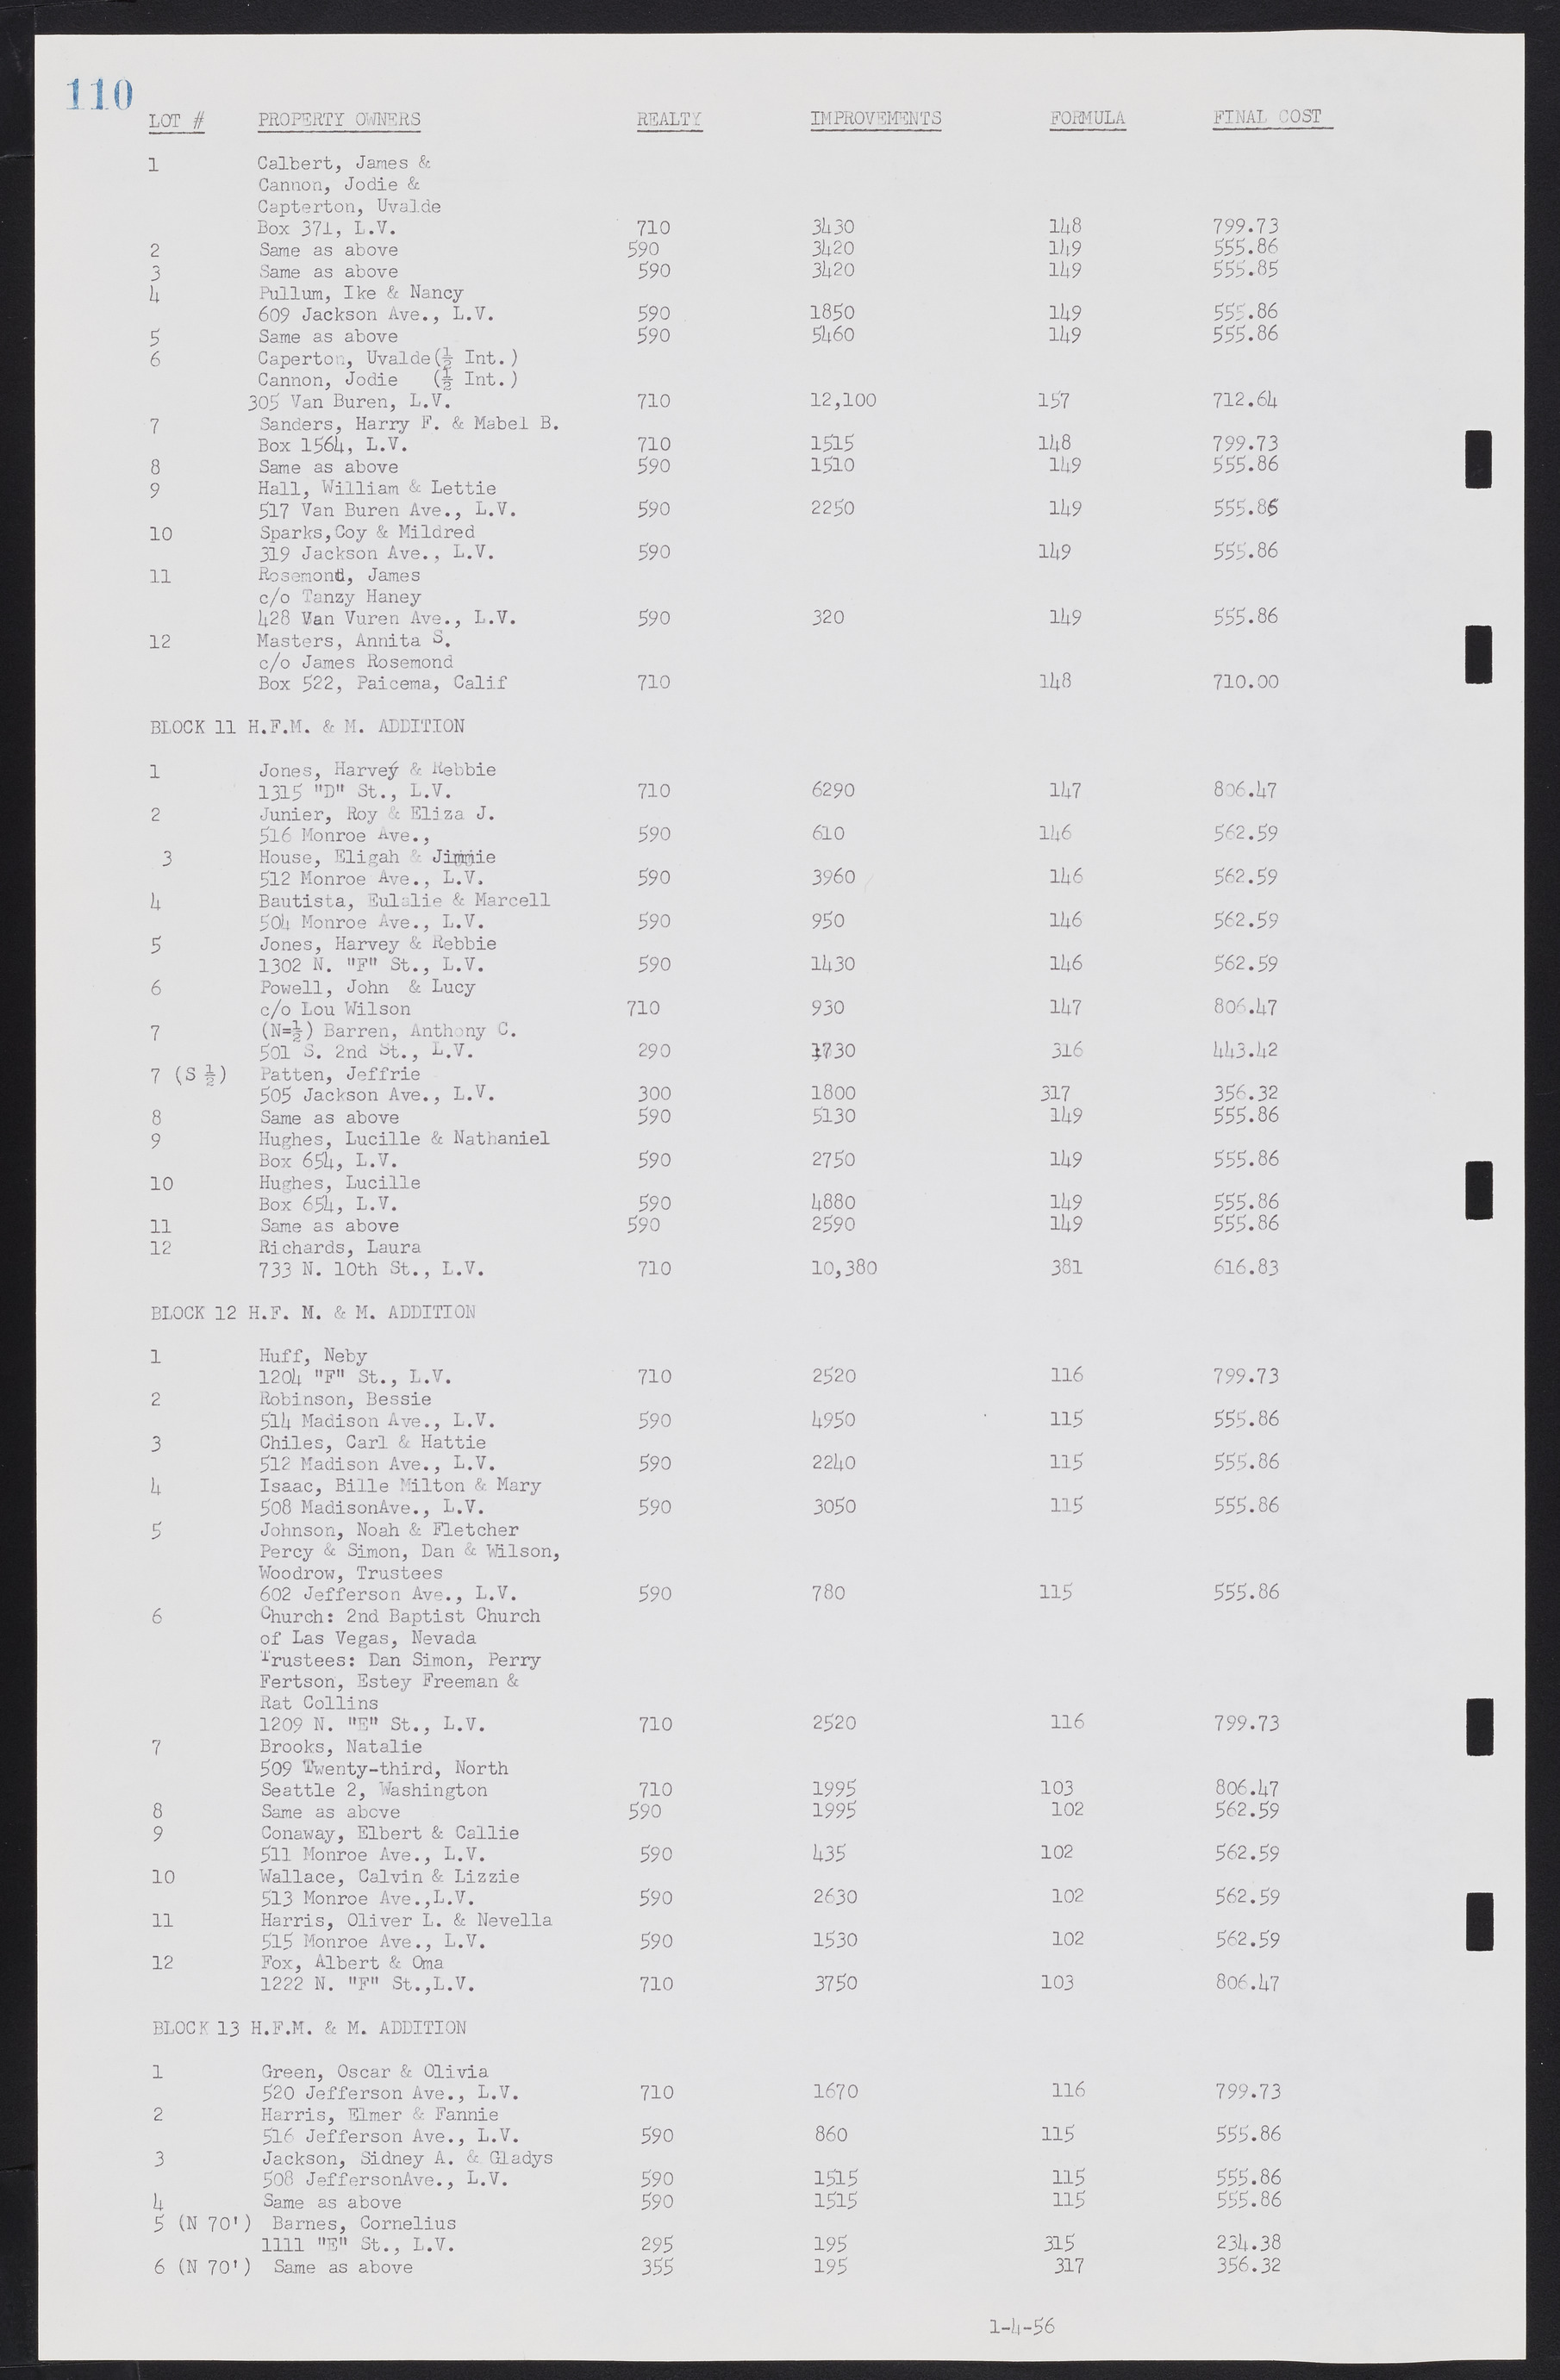 Las Vegas City Commission Minutes, September 21, 1955 to November 20, 1957, lvc000010-120